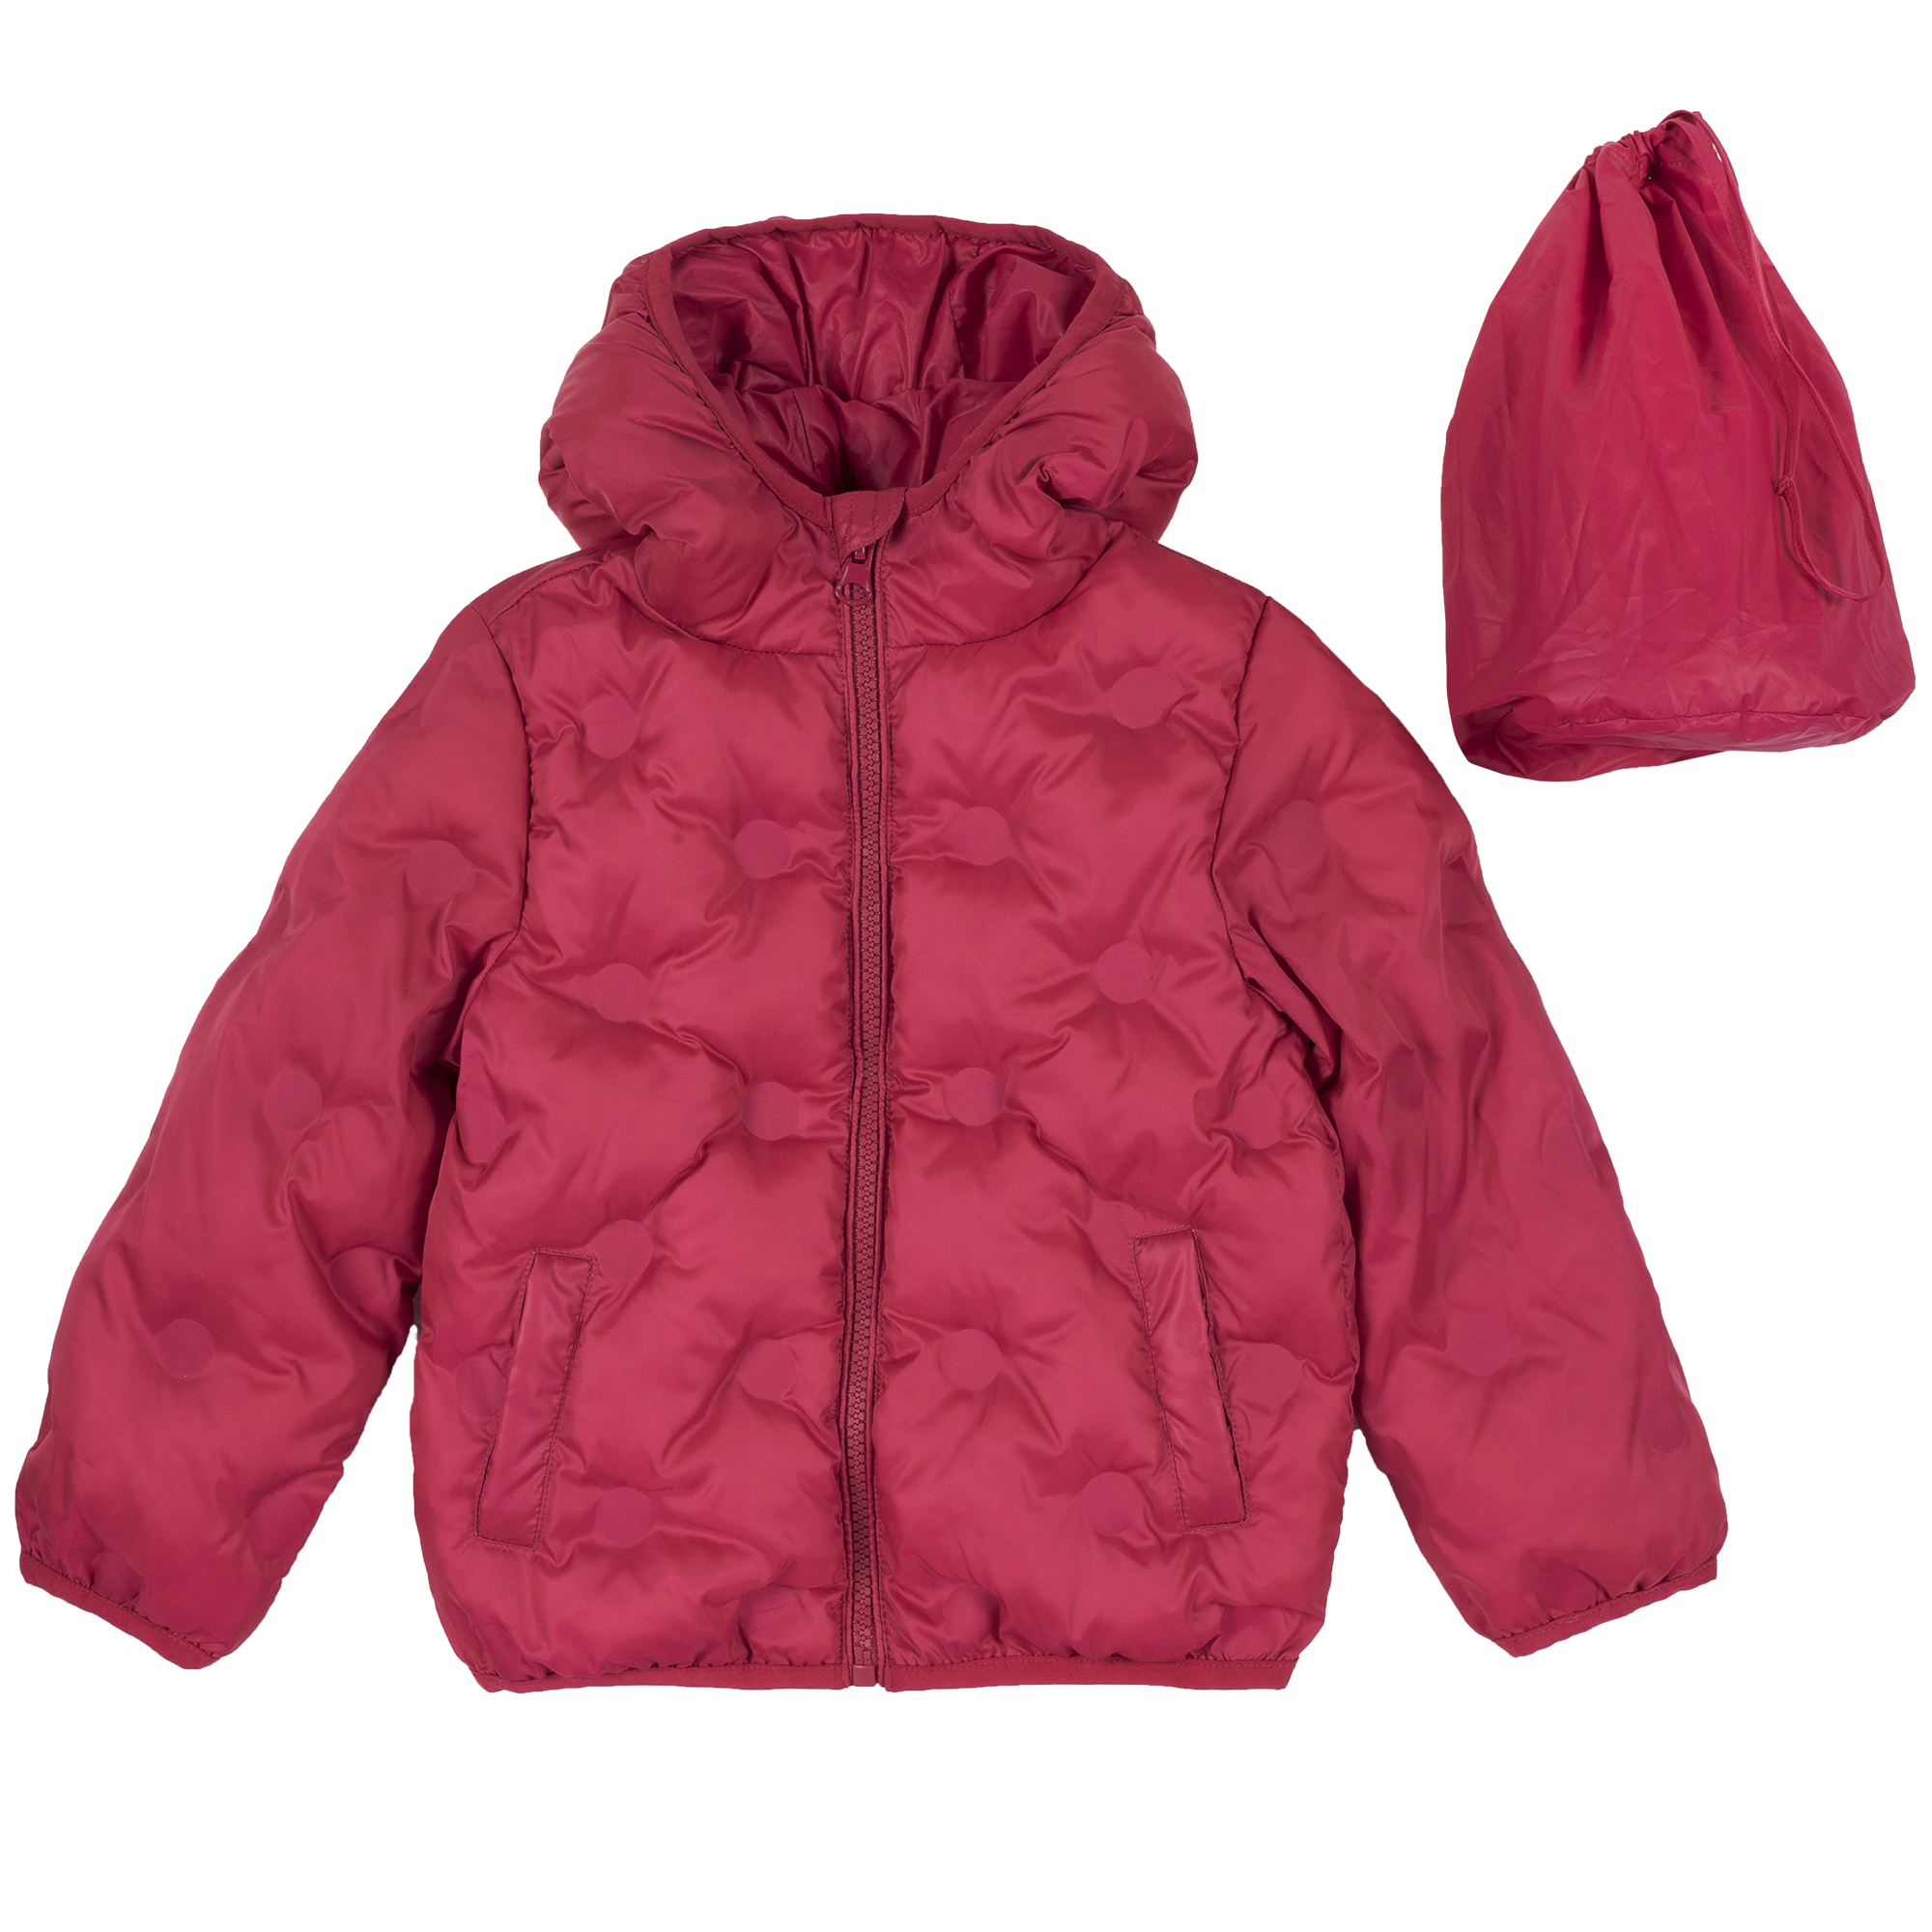 Jacheta copii Chicco, matlasata, rosu/roz, 87411 CHICCO